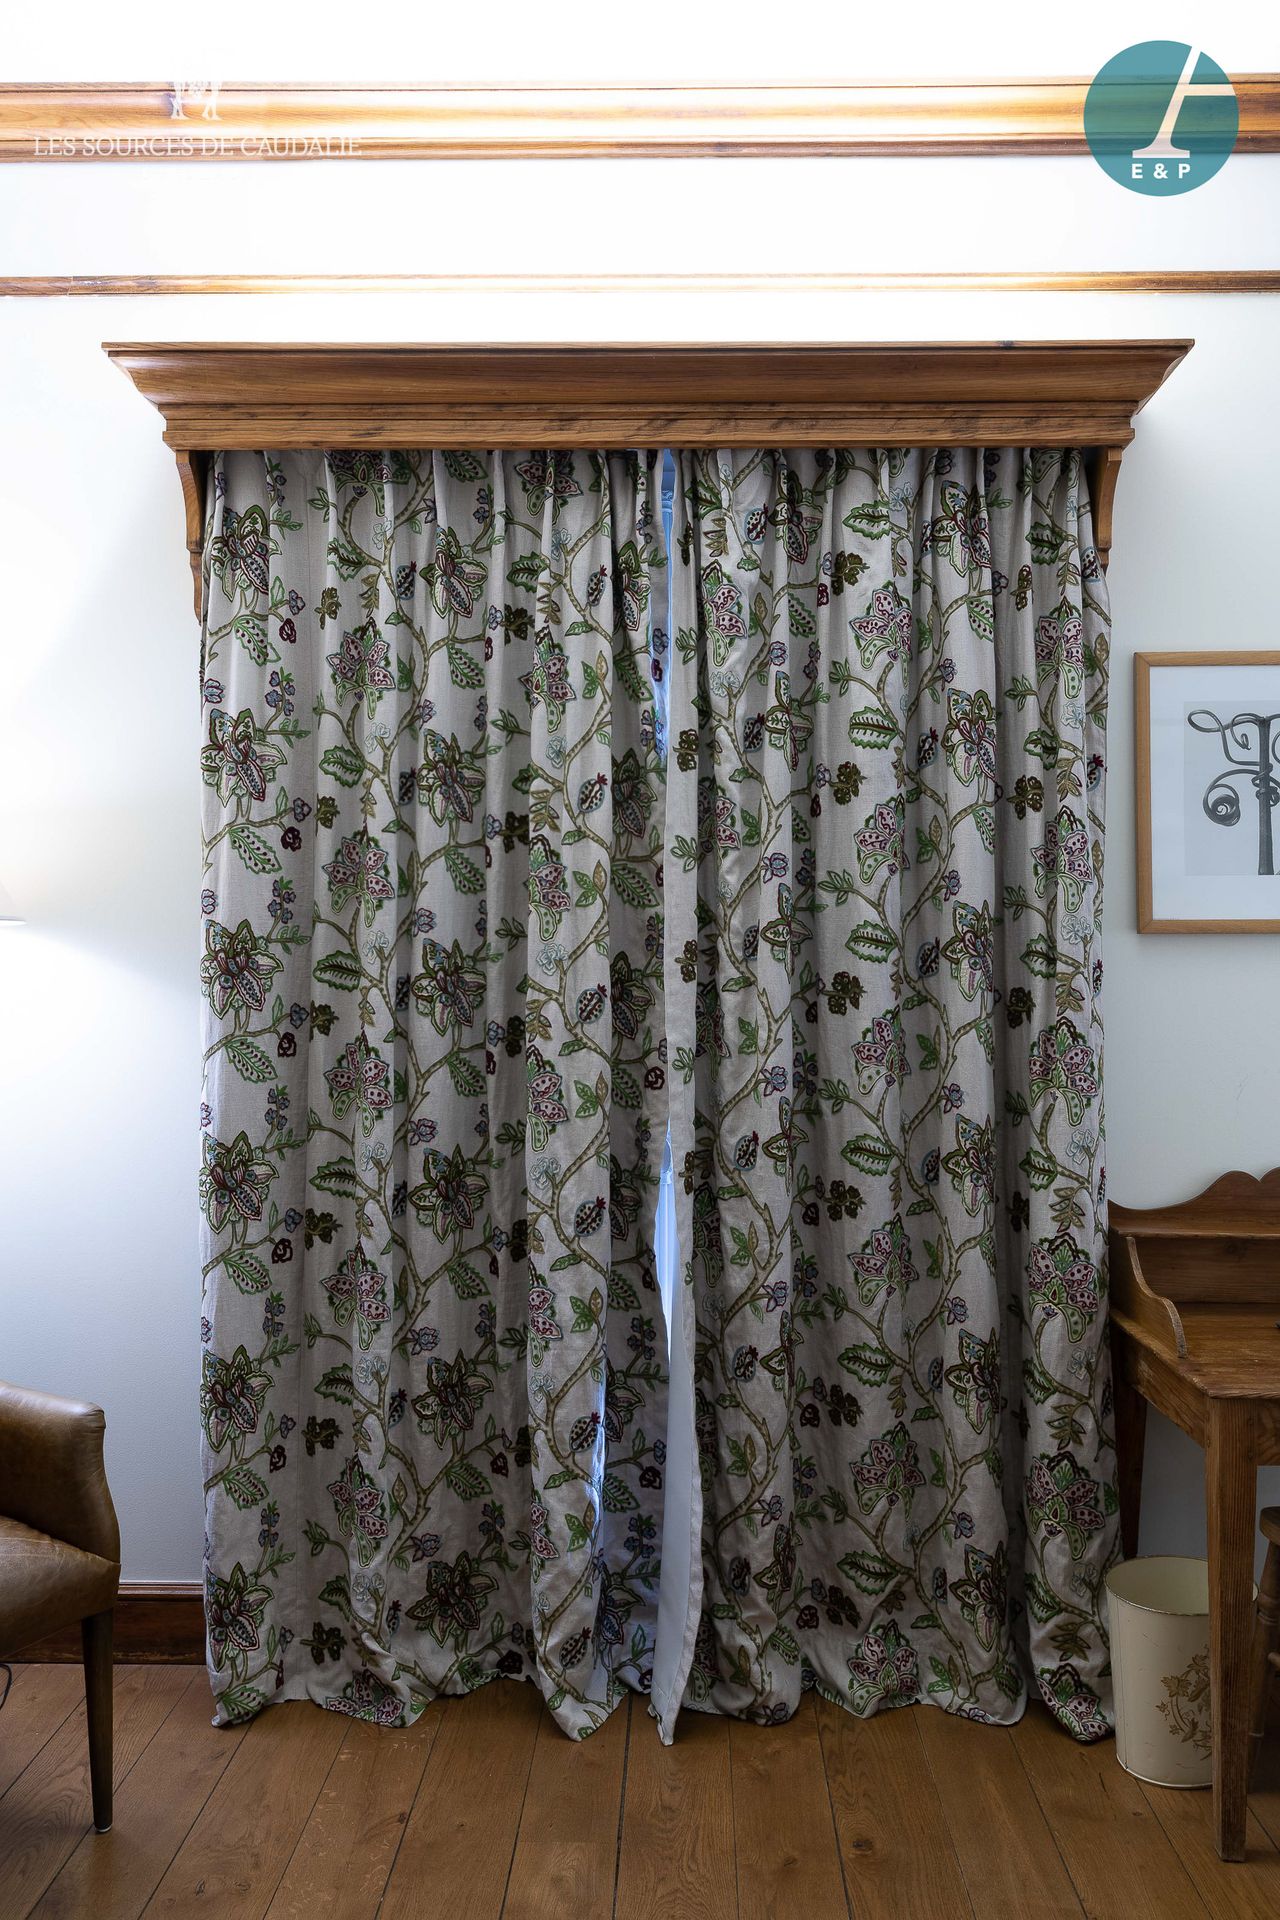 Null 从3号房 "Les Pampres "出发

拍品包括一副窗帘和一个白底花纹的百叶窗，有遮光衬里。

高：250厘米 - 宽：100厘米（X2）。